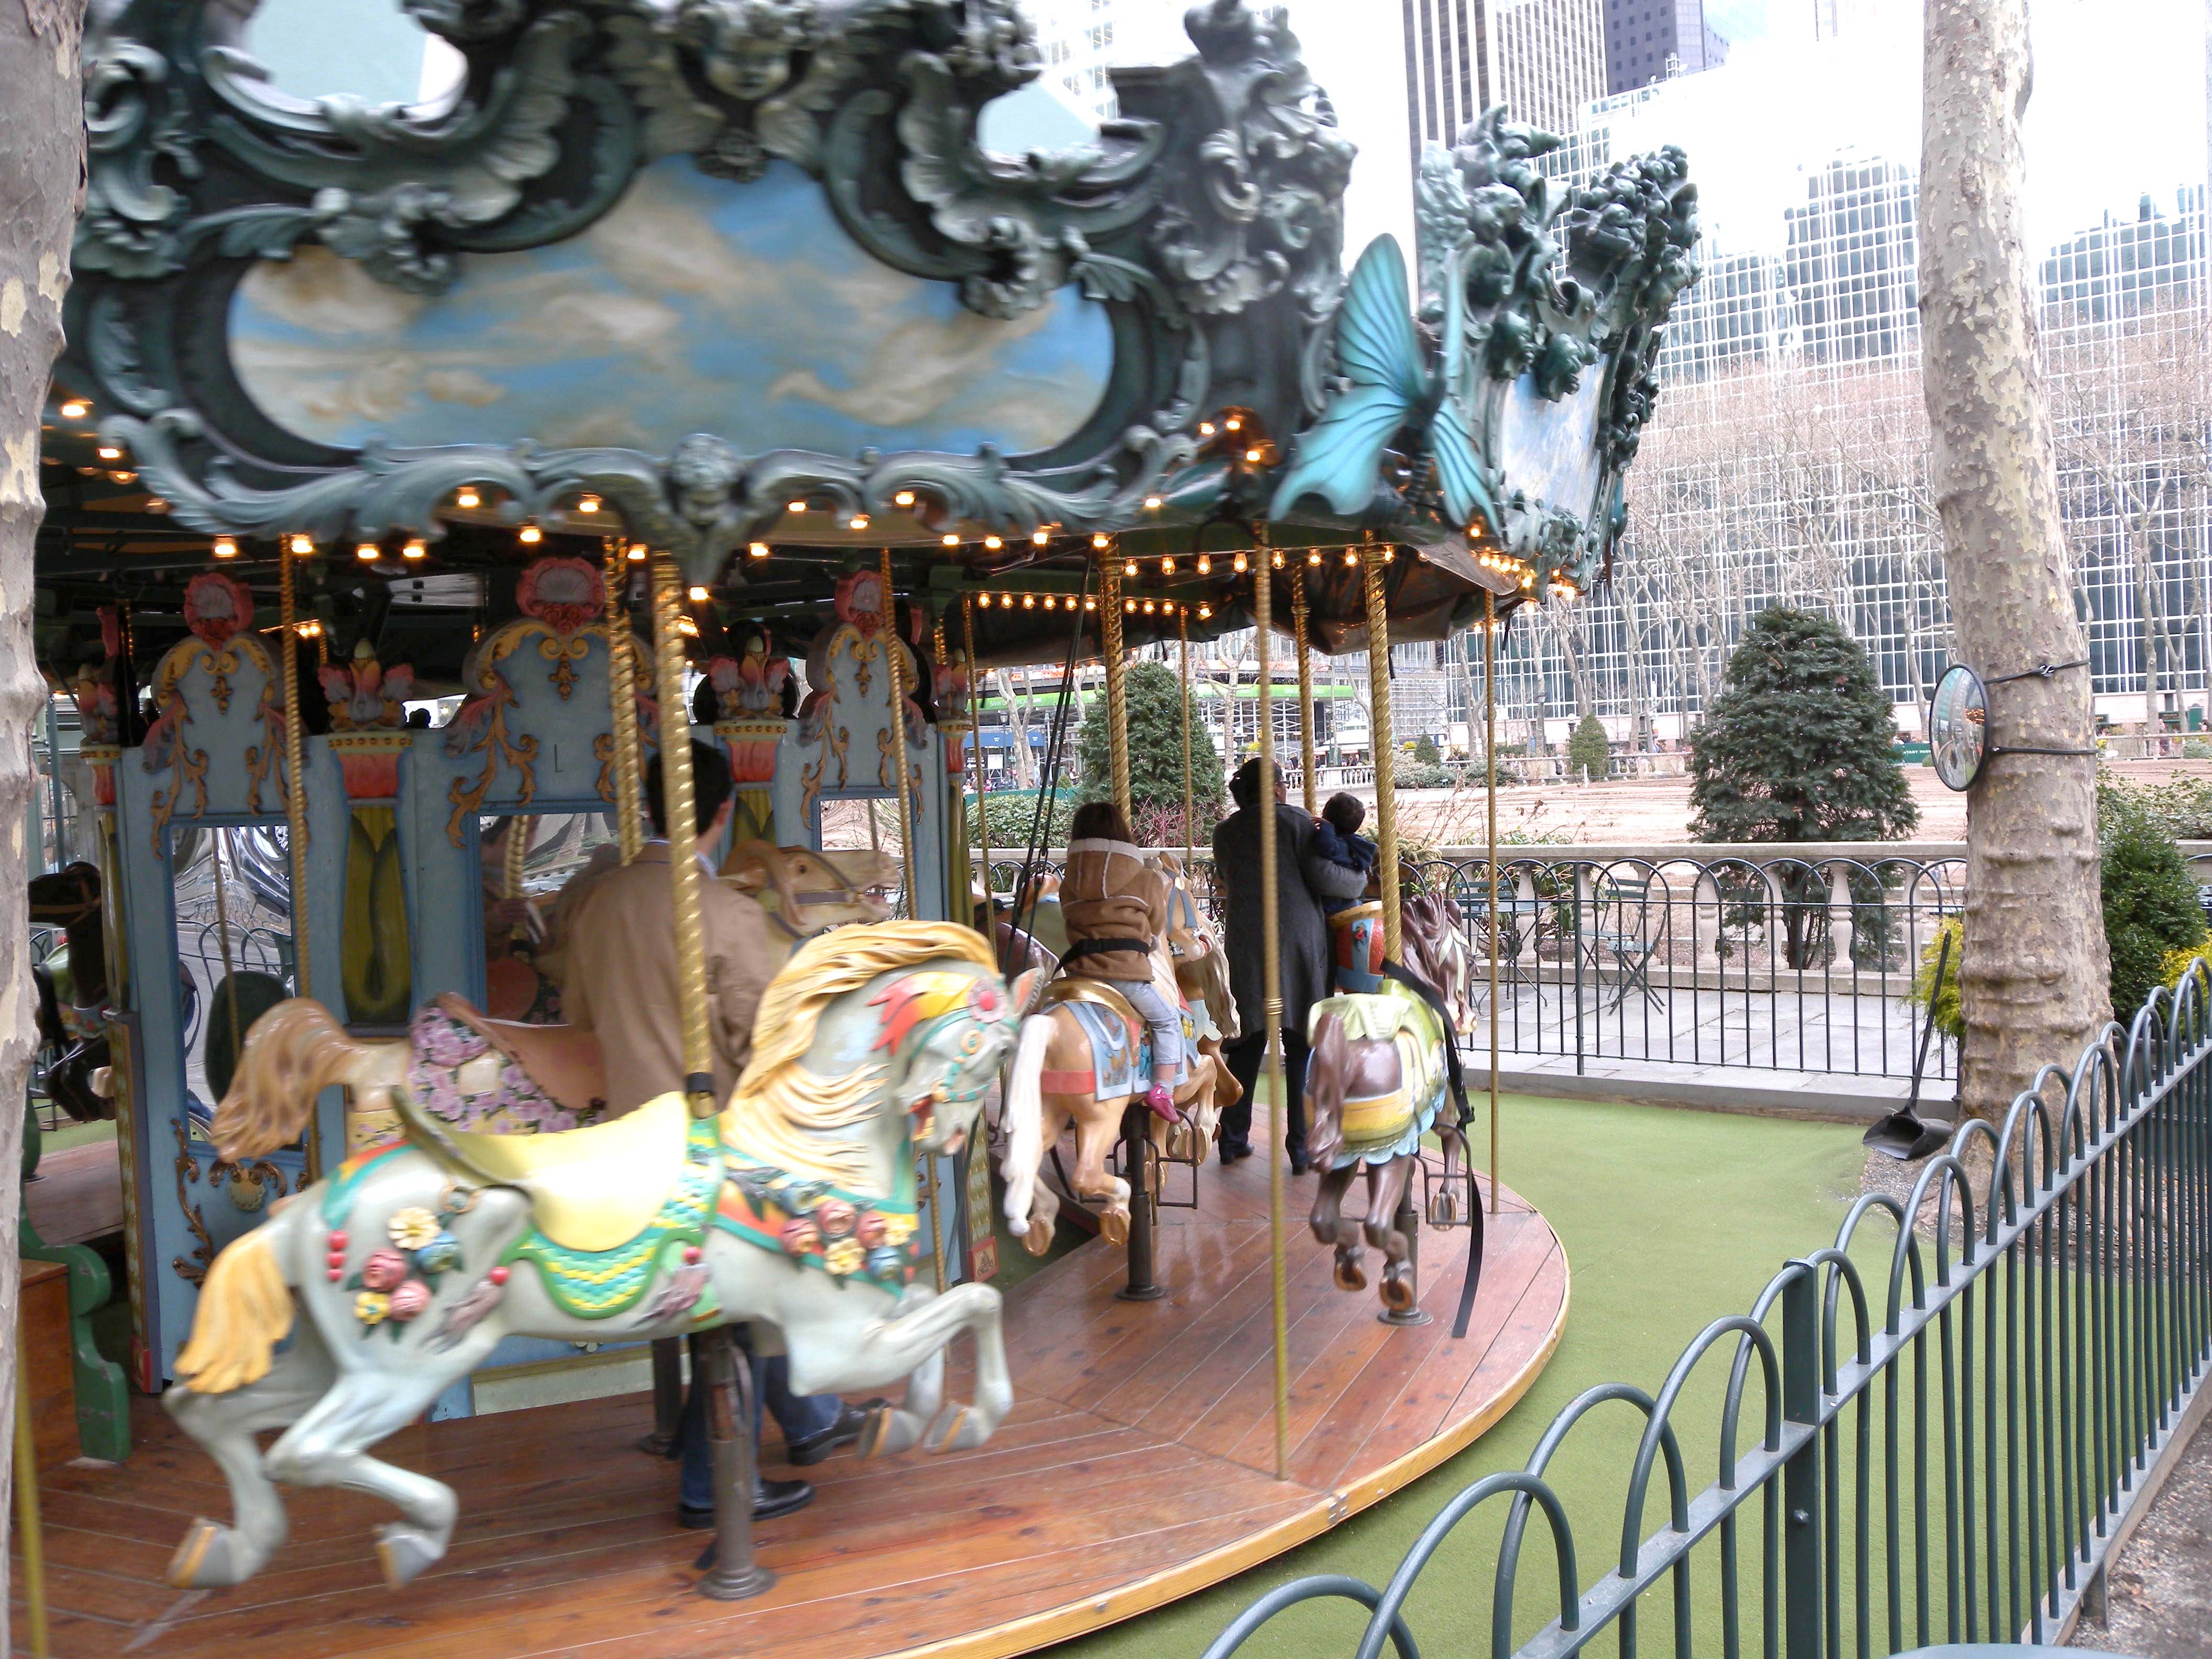 Park Carousel